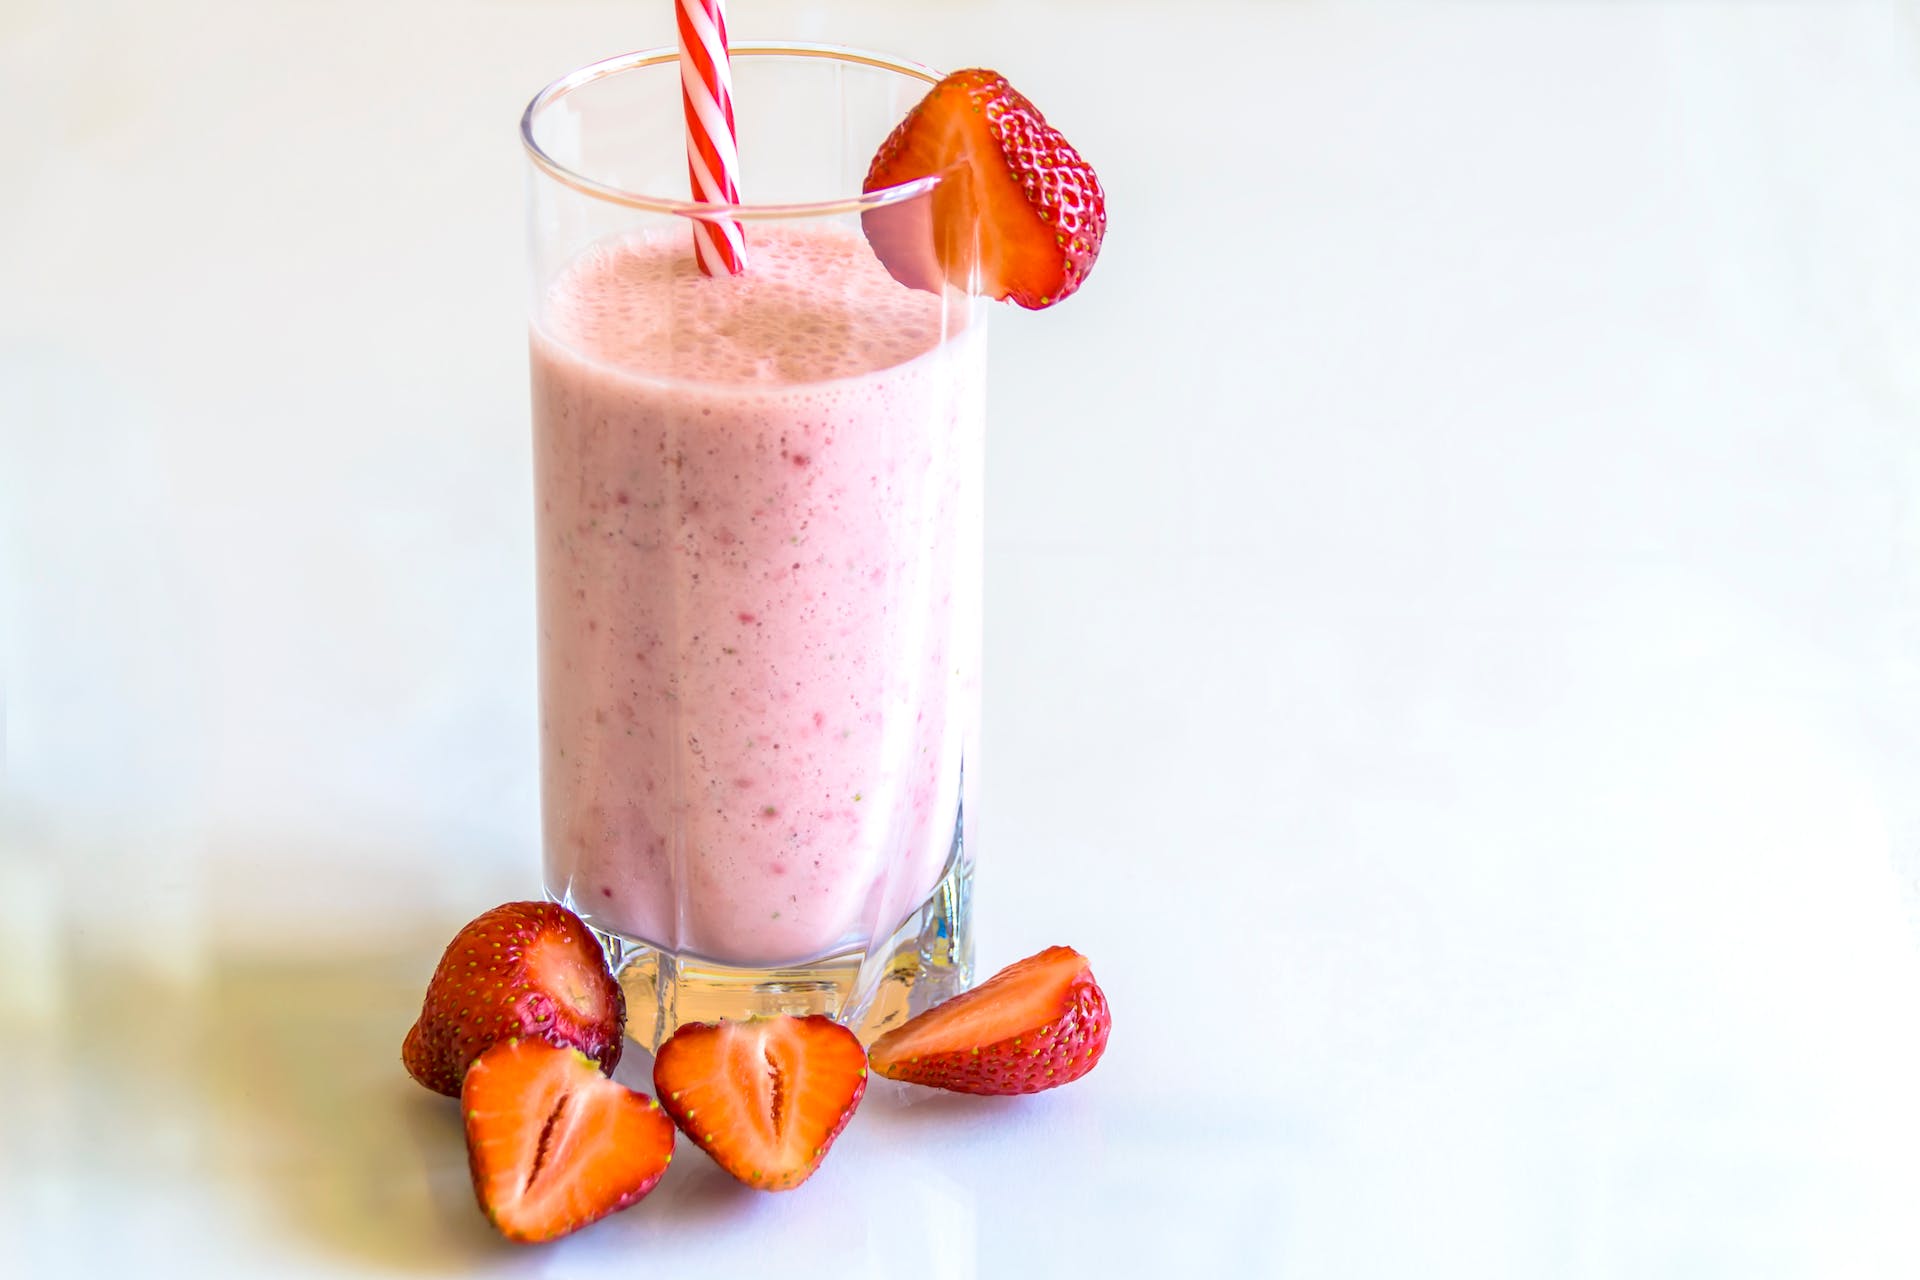 Strawberry milkshake | Source: Pexels